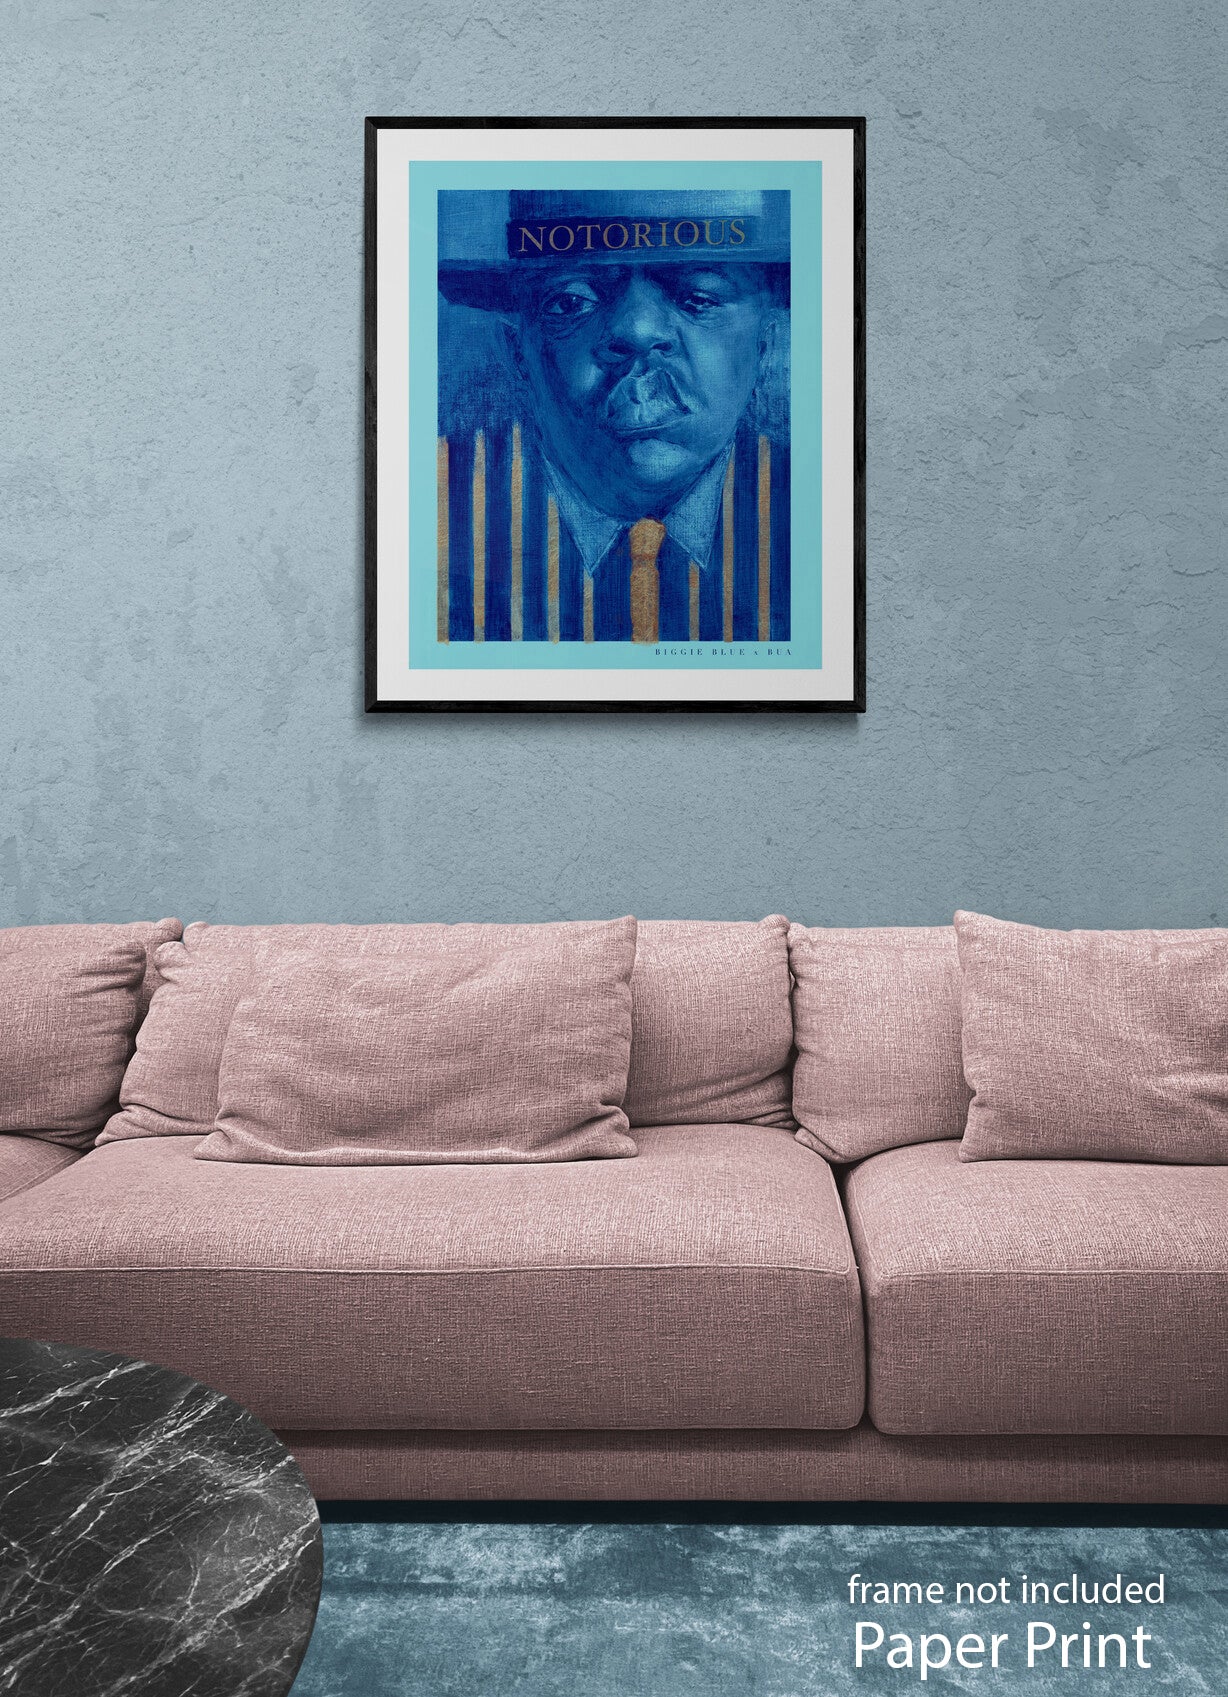 The Notorious B.I.G. Art print by urban artist Justin BUA